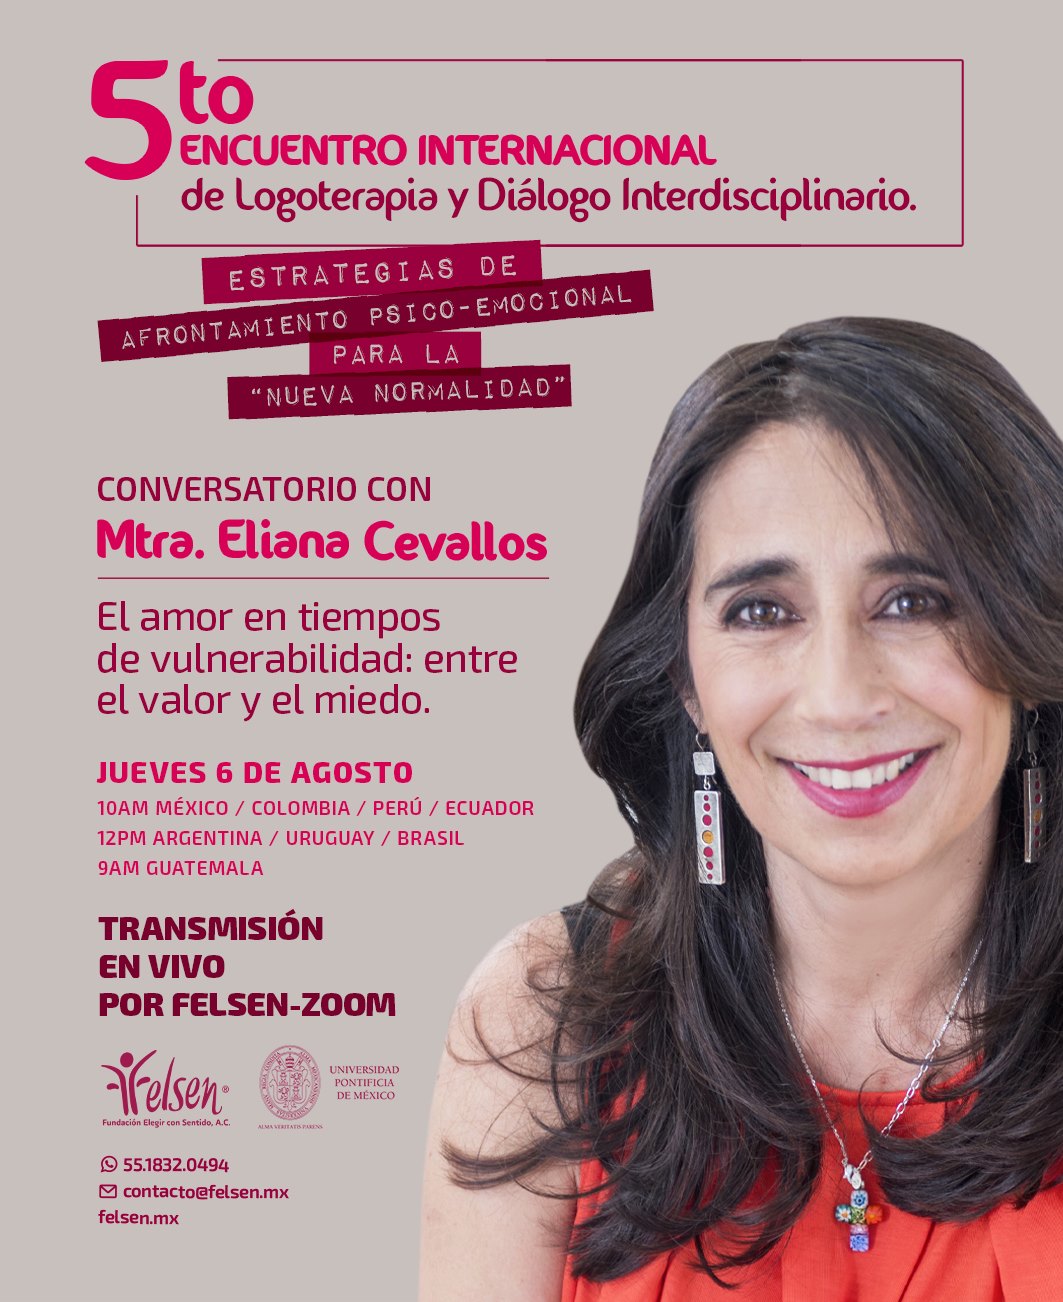 5to encuentro internacional de logoterapia y diálogo interdisciplinario - México, 6 de agosto de 2020